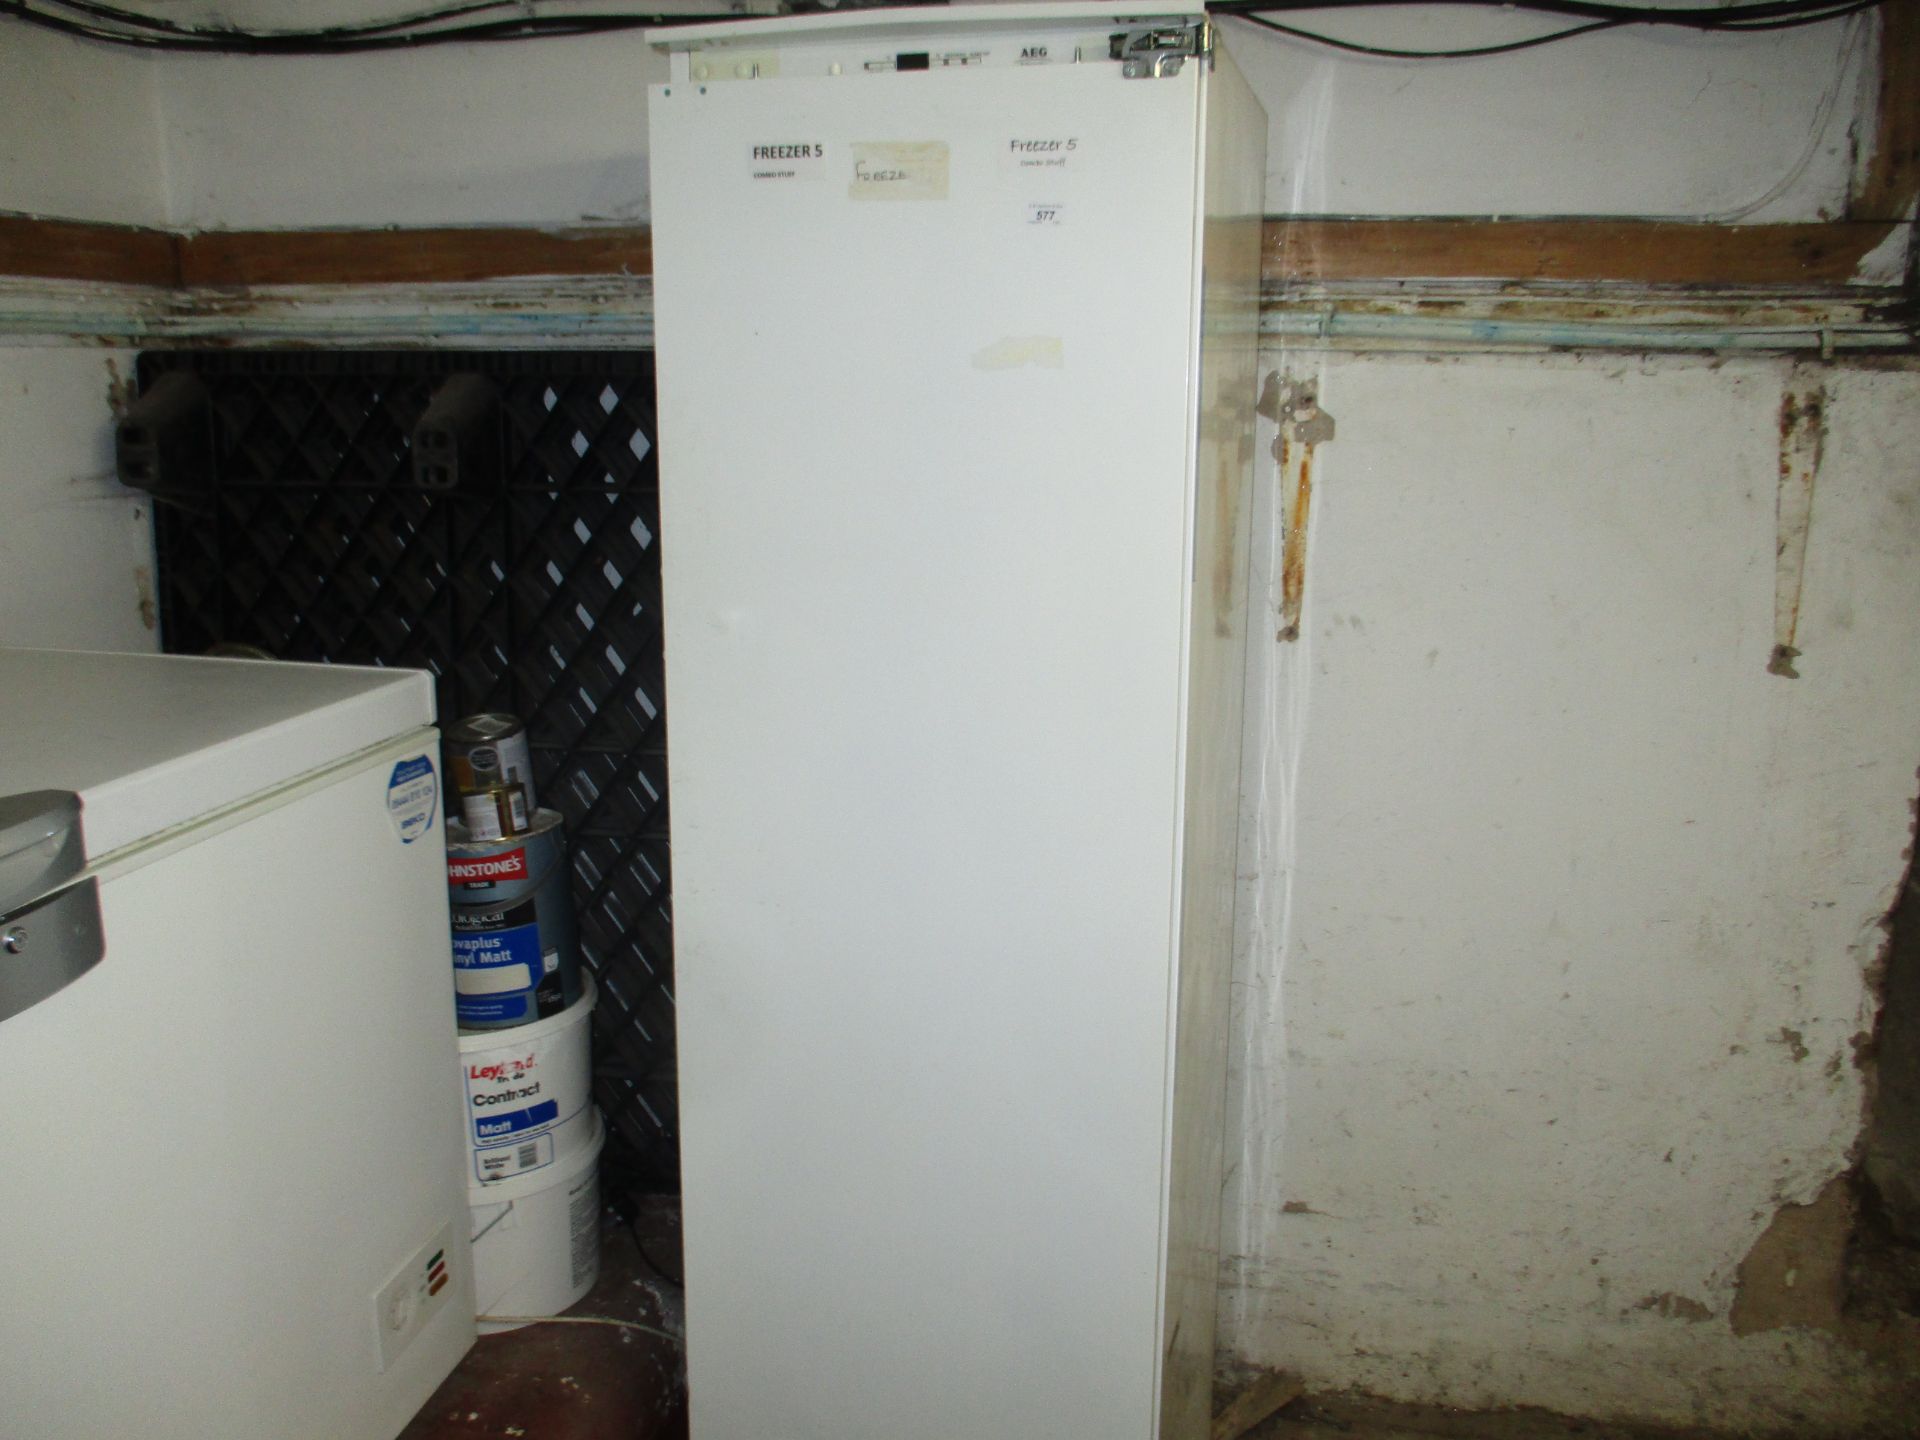 An AEG Electrolux upright freezer